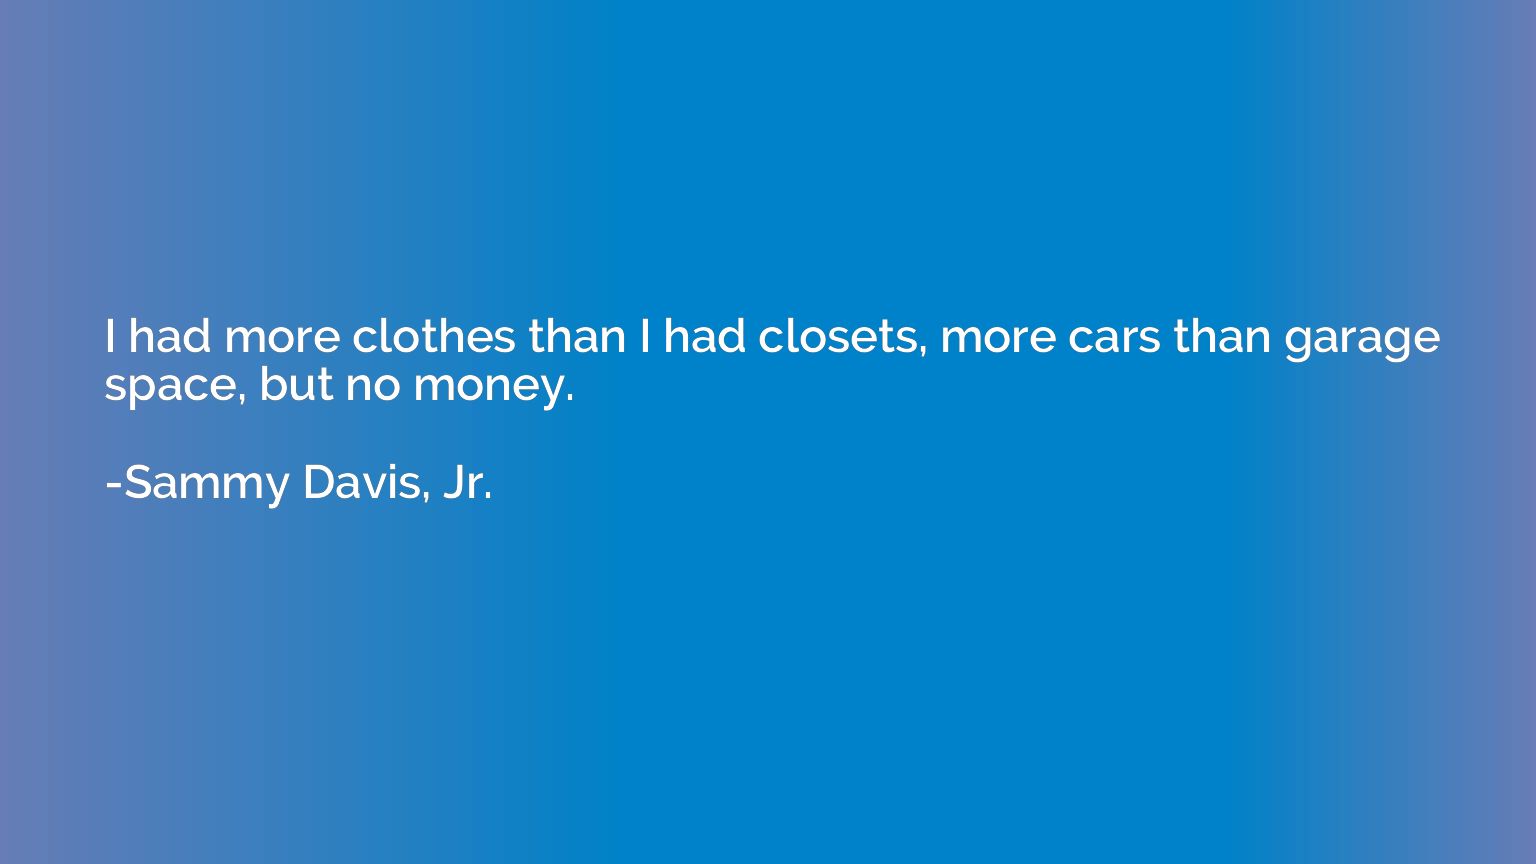 I had more clothes than I had closets, more cars than garage